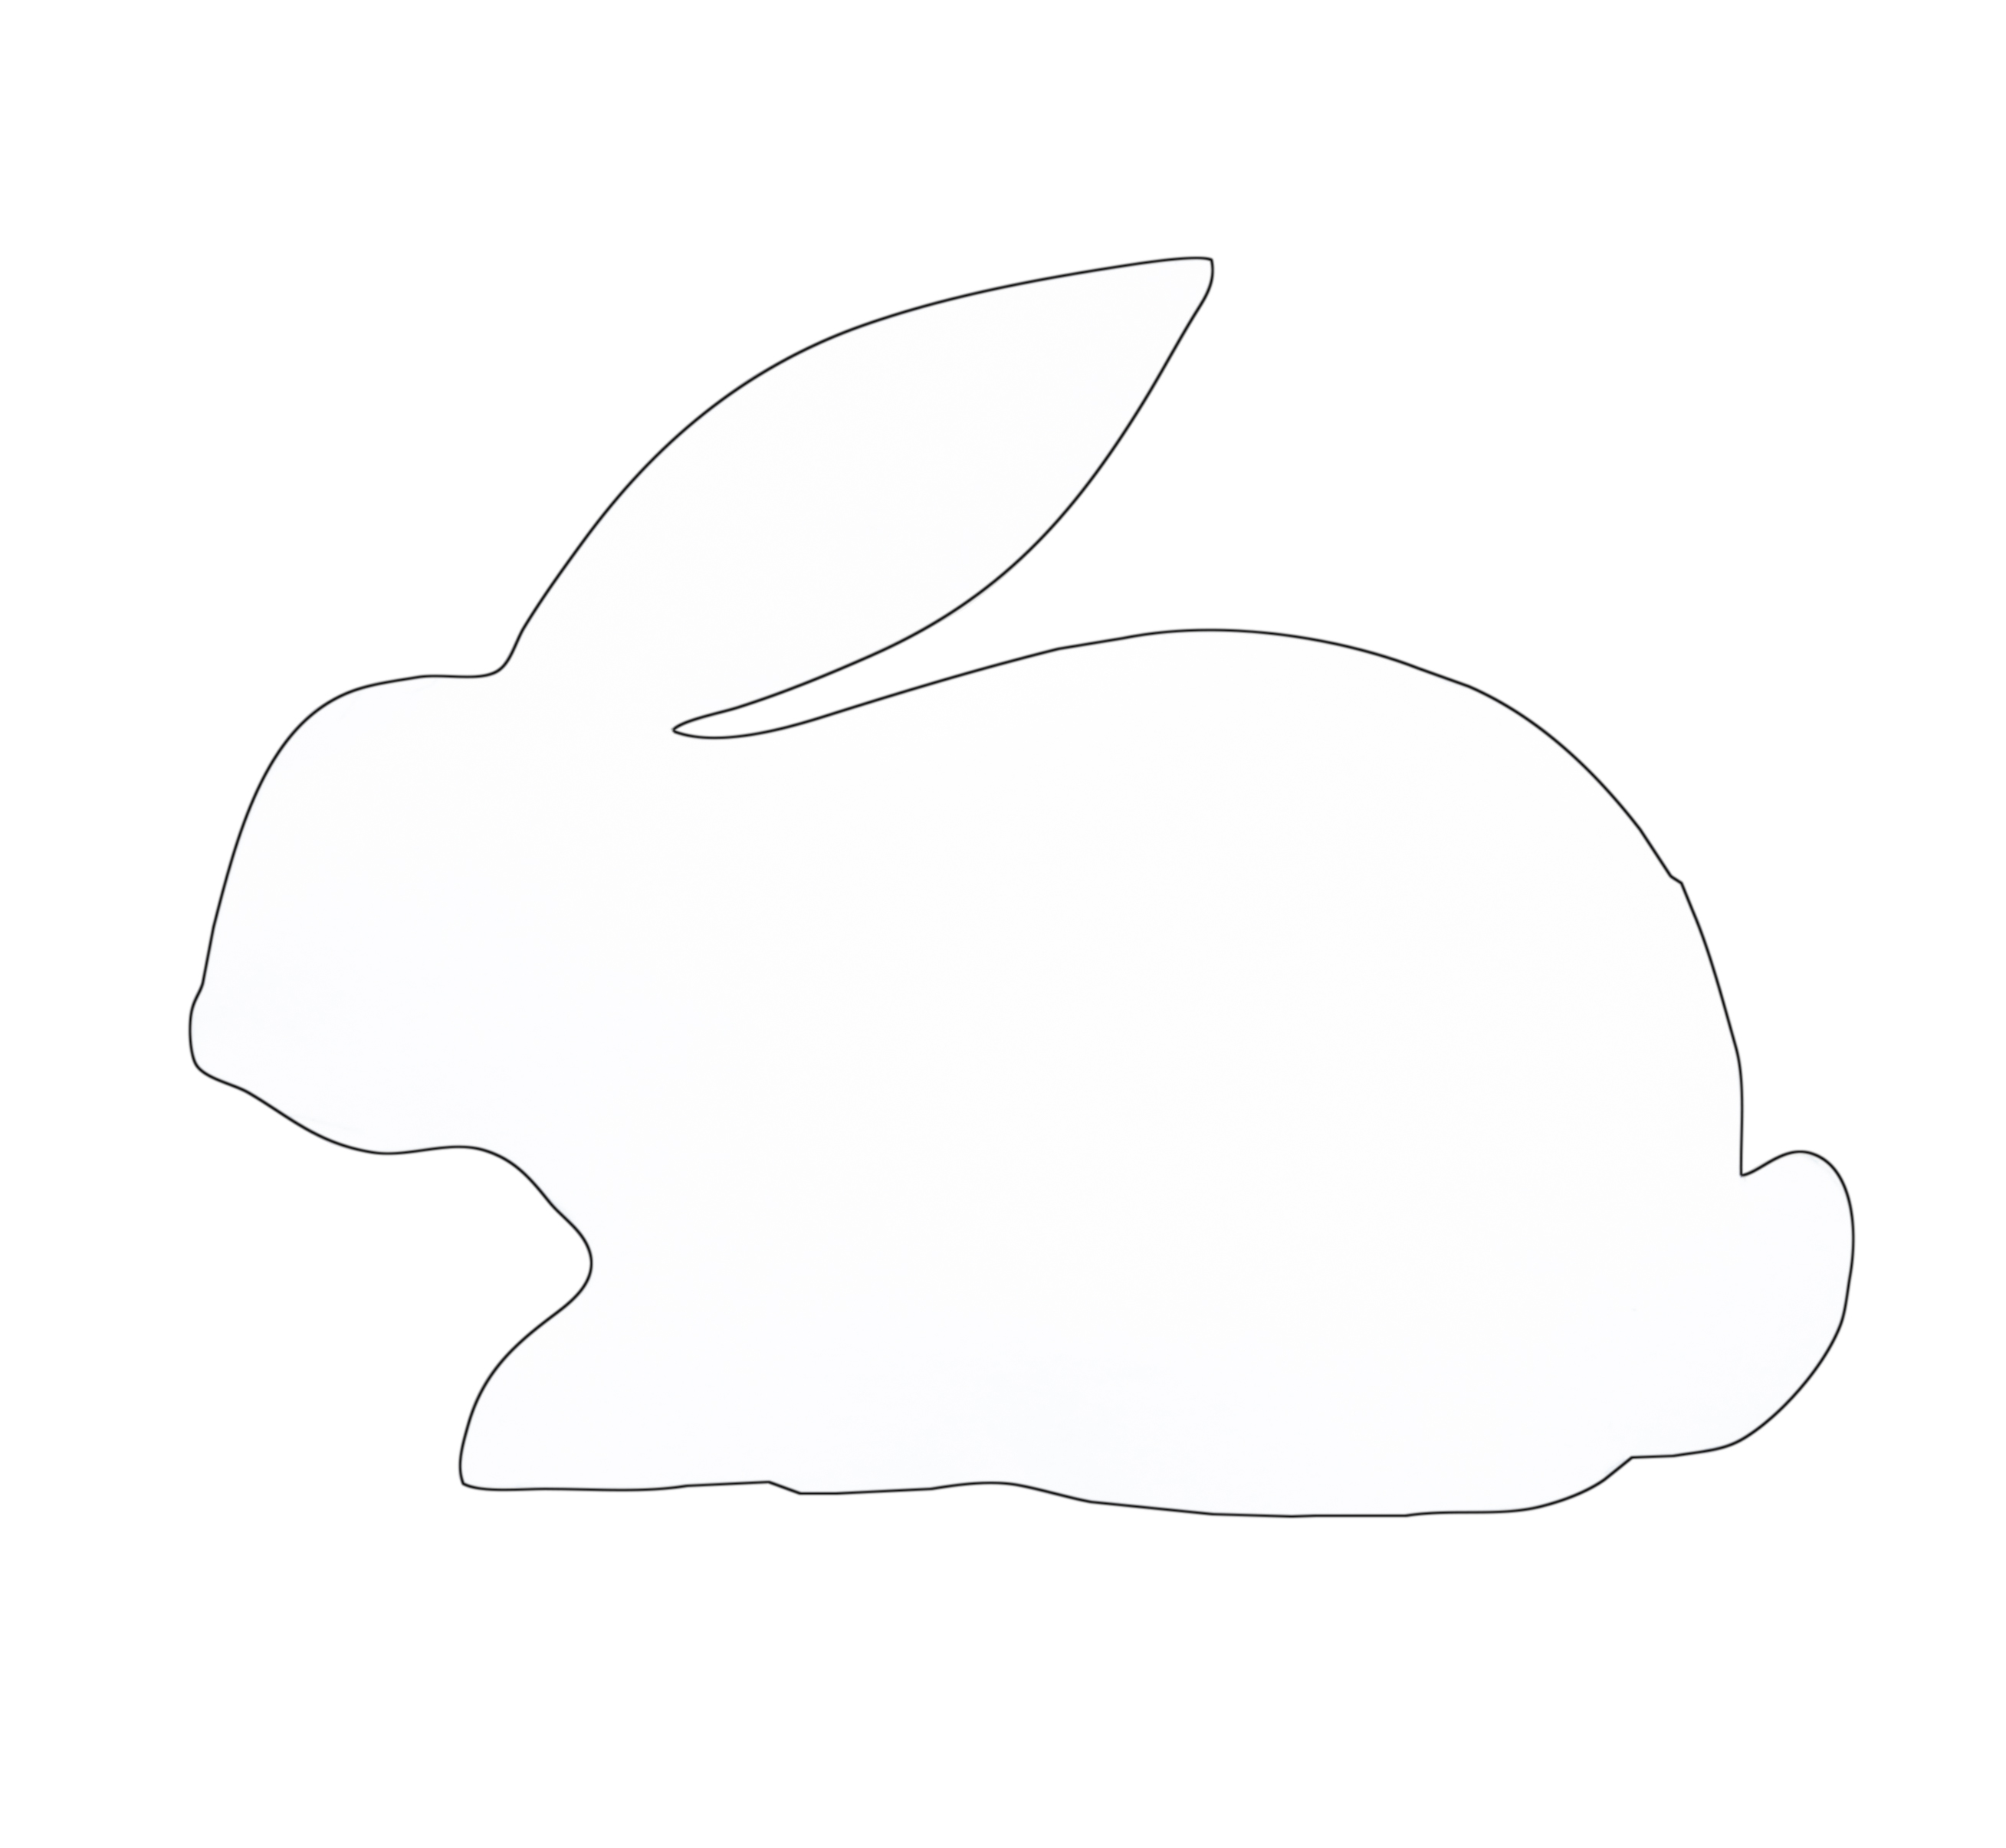 Bunny outline free download clip art on jpg